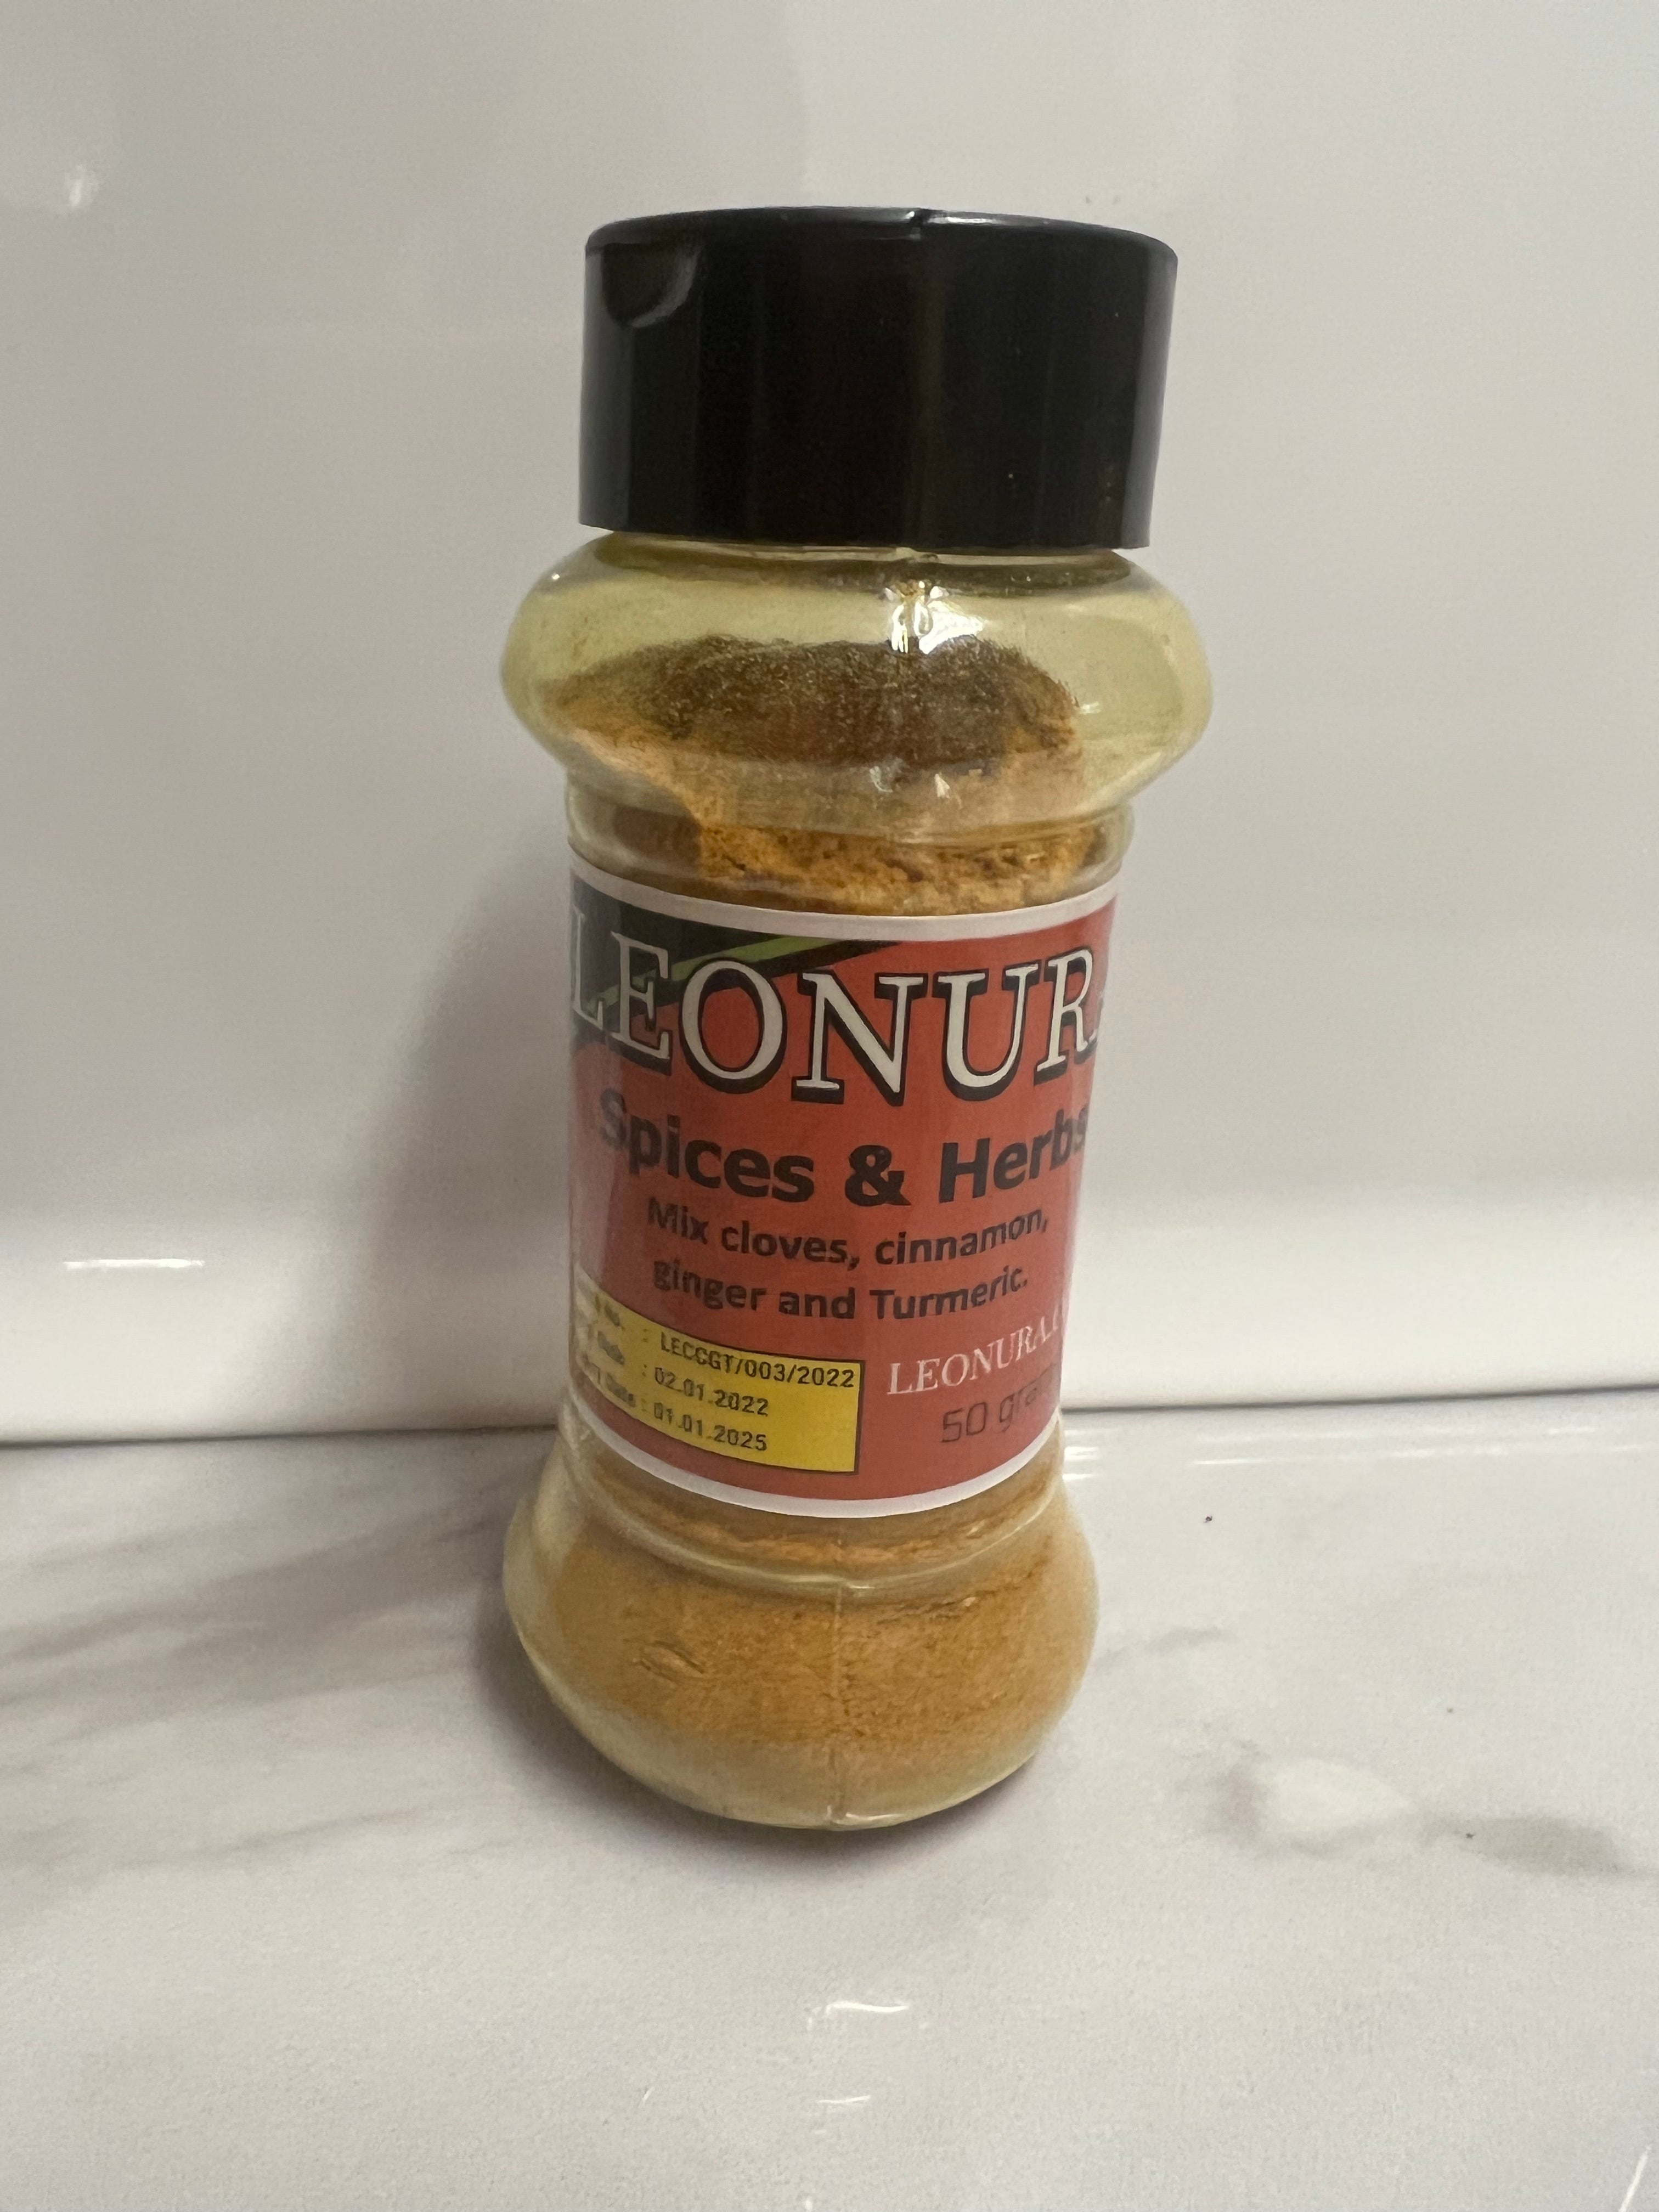 Leonura spices and Herbs